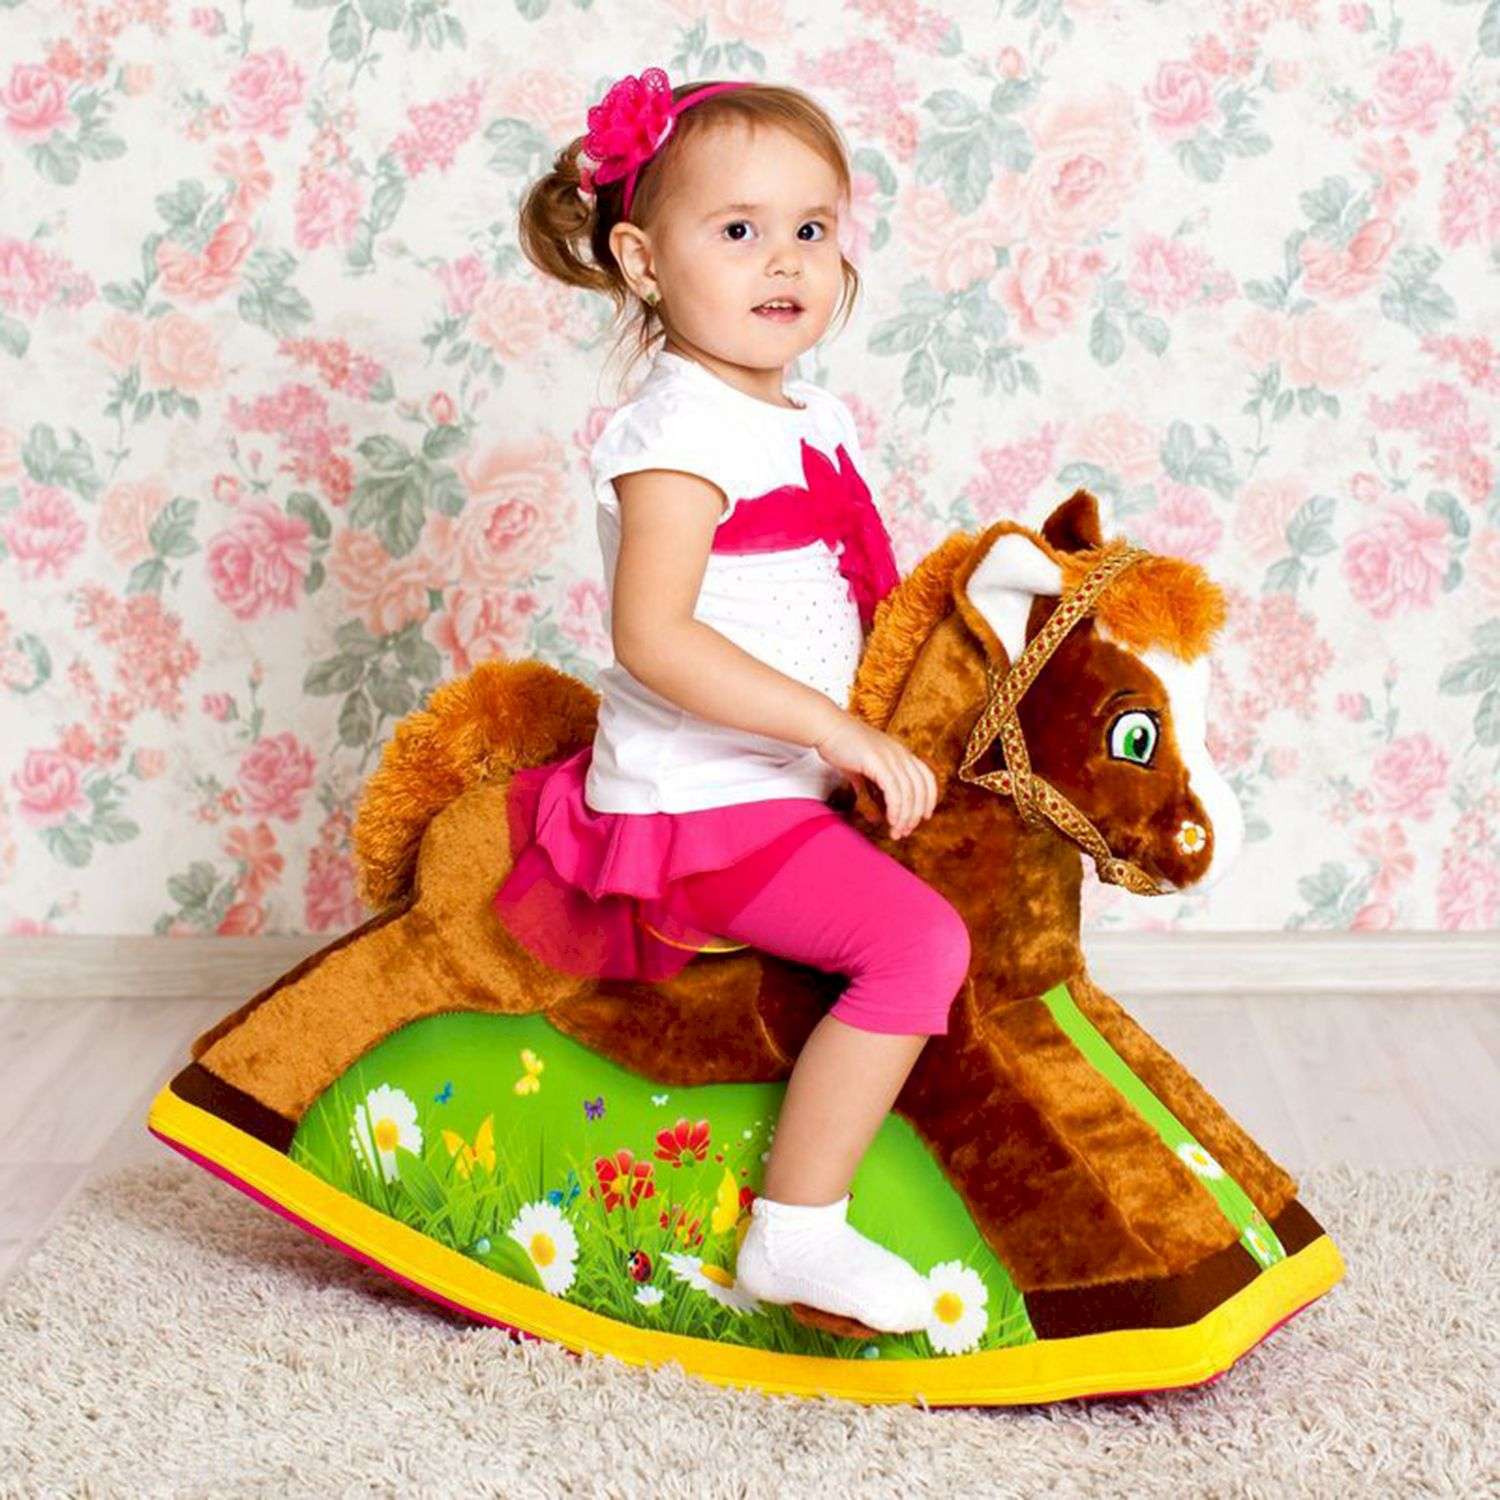 Сколько лошадке лет. Качалка Paremo "лошадка". Orion Toys качалка «лошадка 2». Качающаяся лошадка. Качалка детская лошадка.